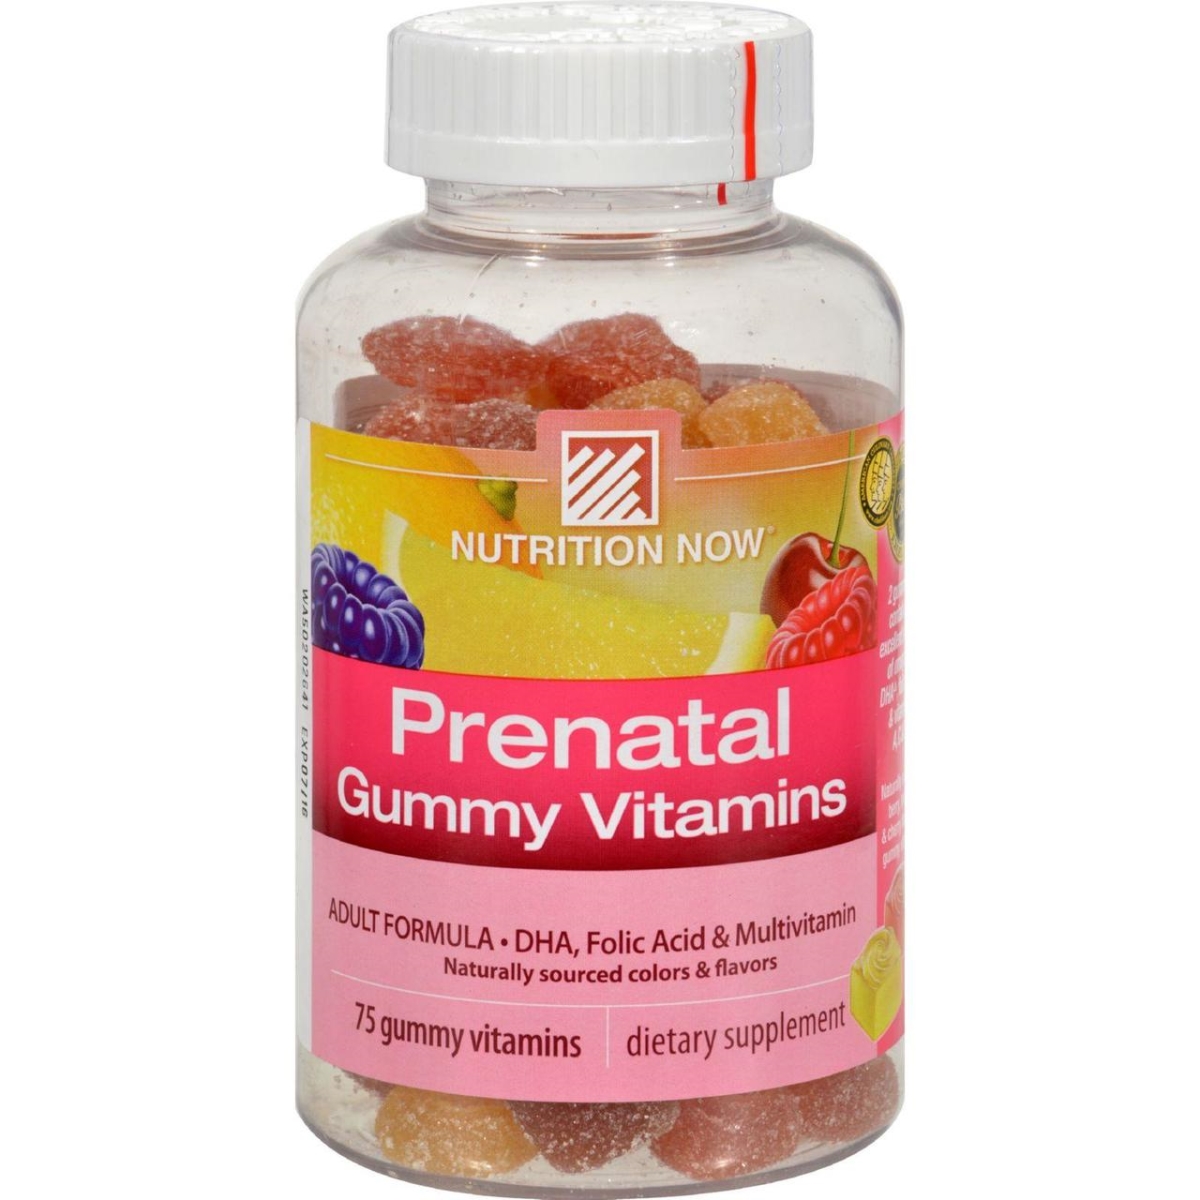 Hg0954453 Prenatal Gummy Vitamins - 75 Gummies